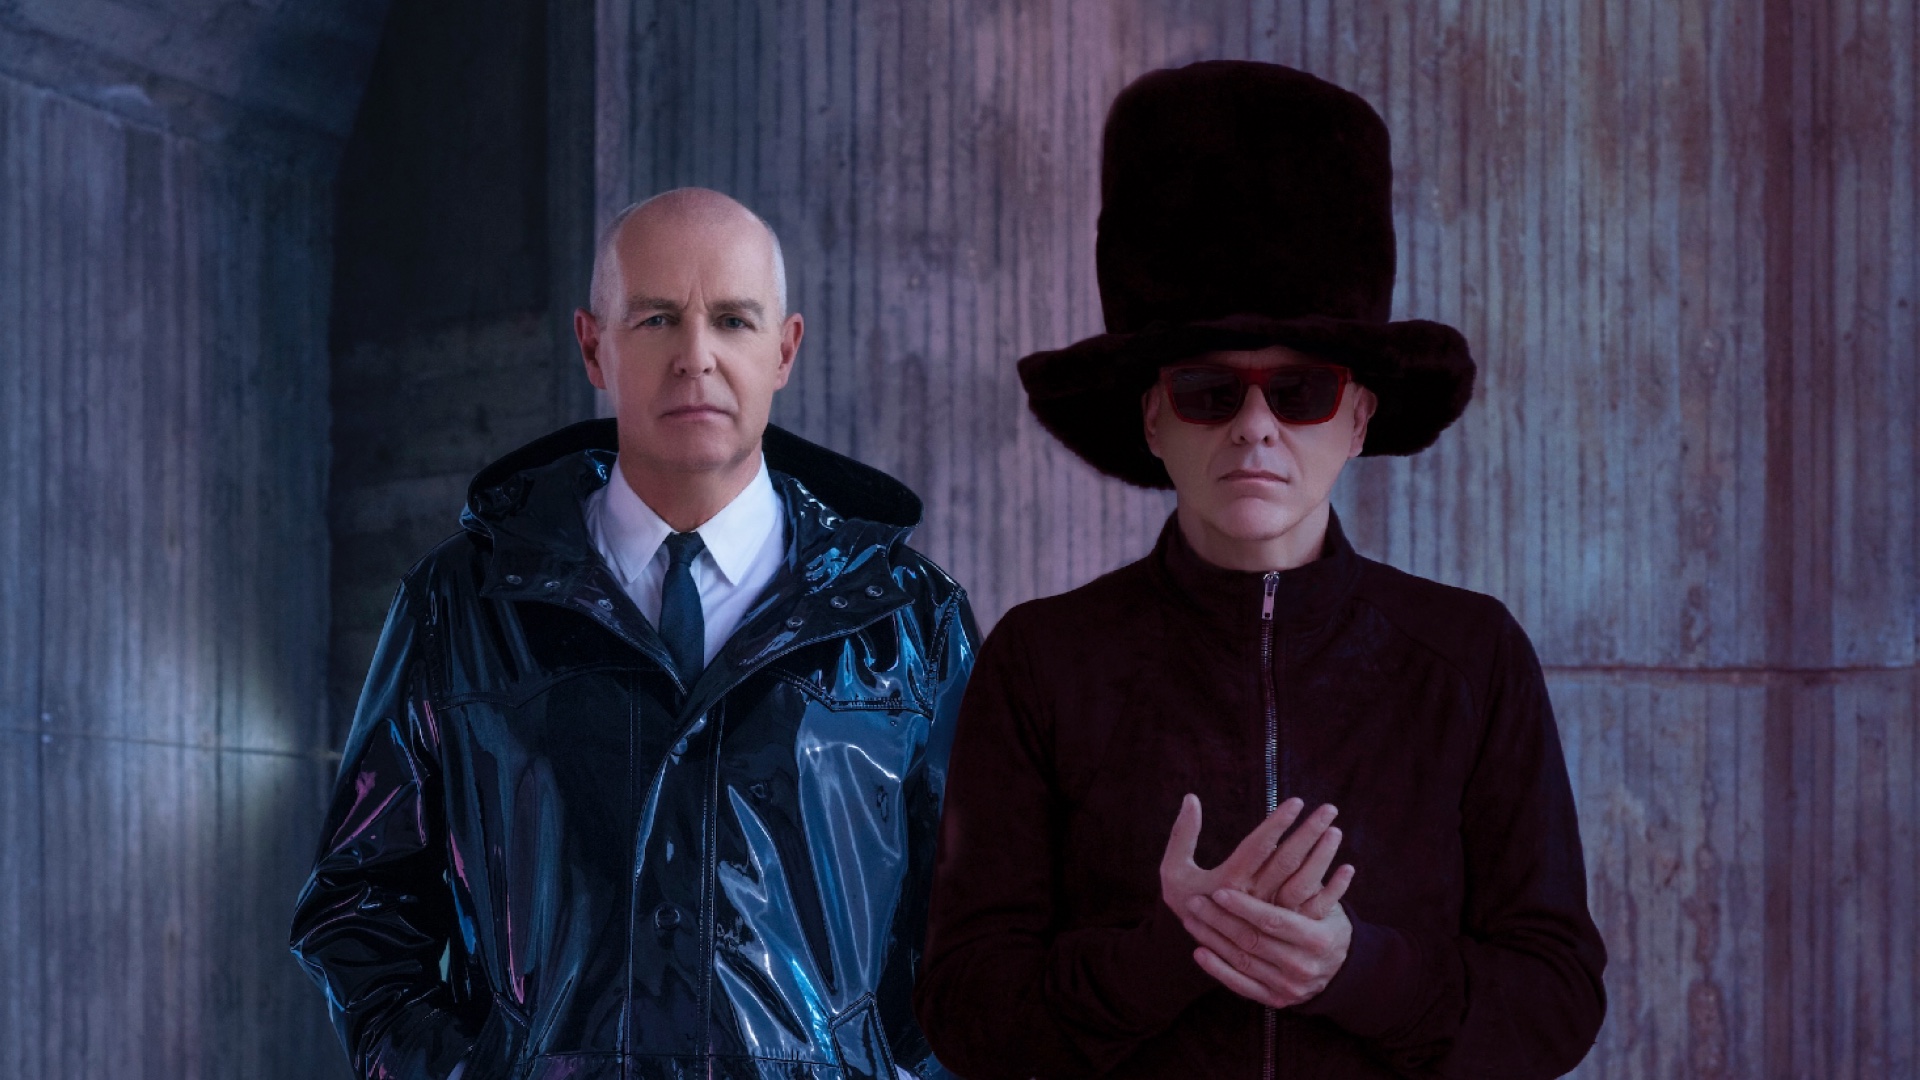 Pet Shop Boys - SMASH review - Attitude